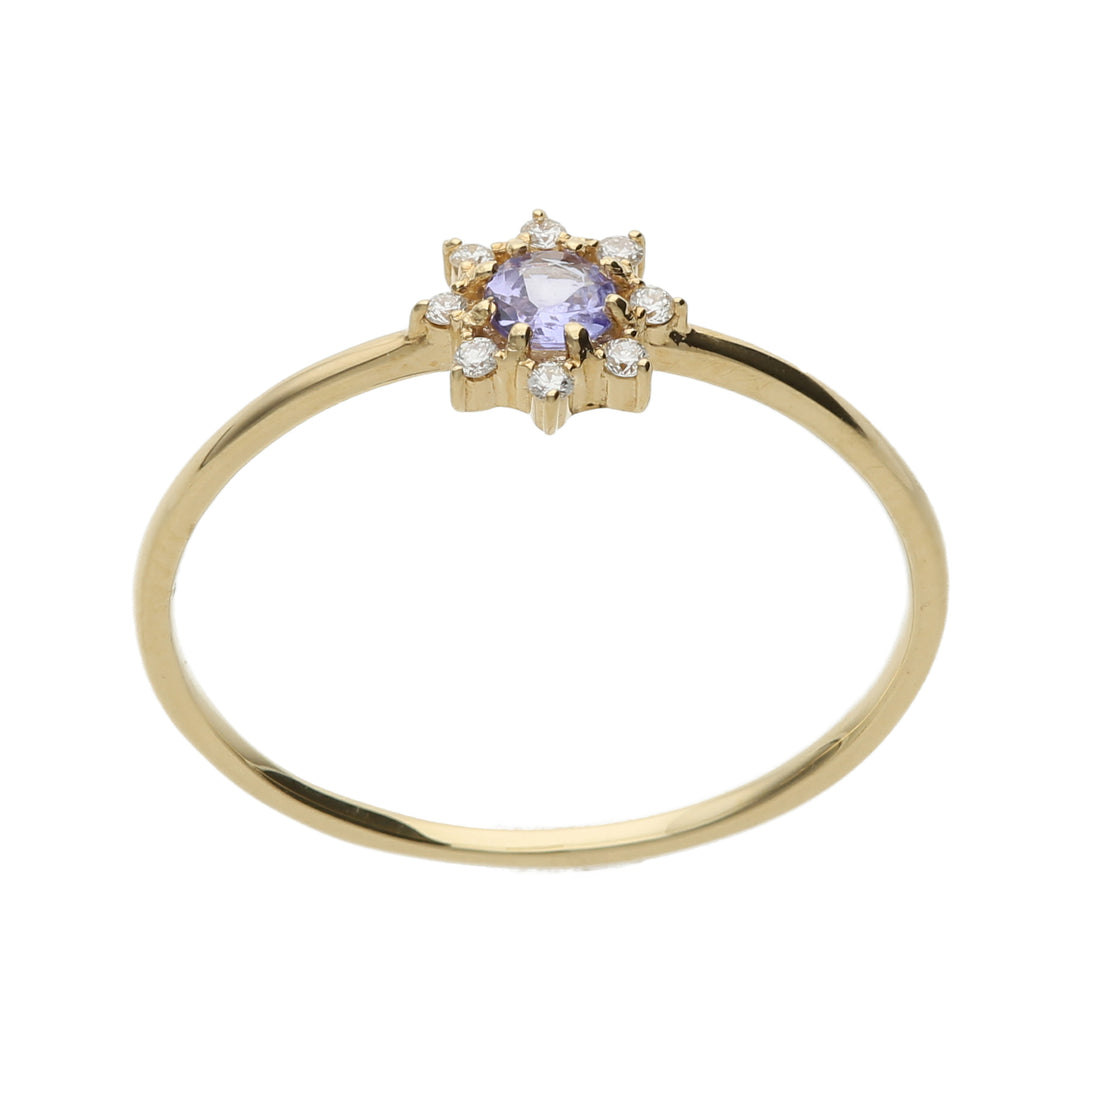 Stackable April Birthstone Rings - Diamond – Sweet Romance Jewelry